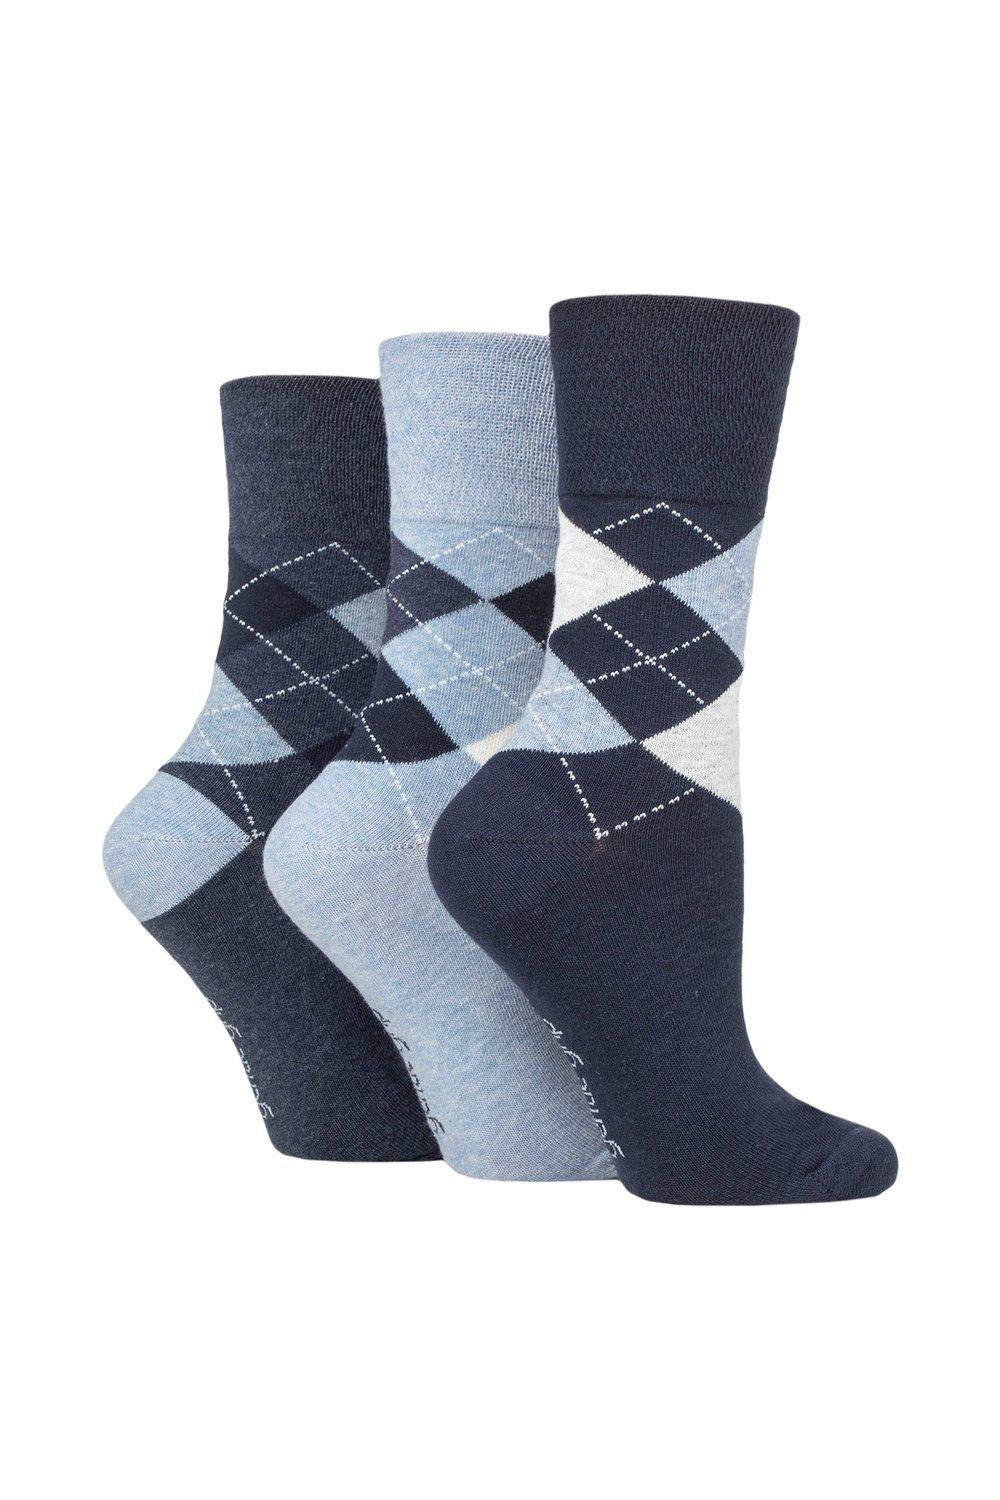 3 Pair Argyle Patterned Cotton Socks